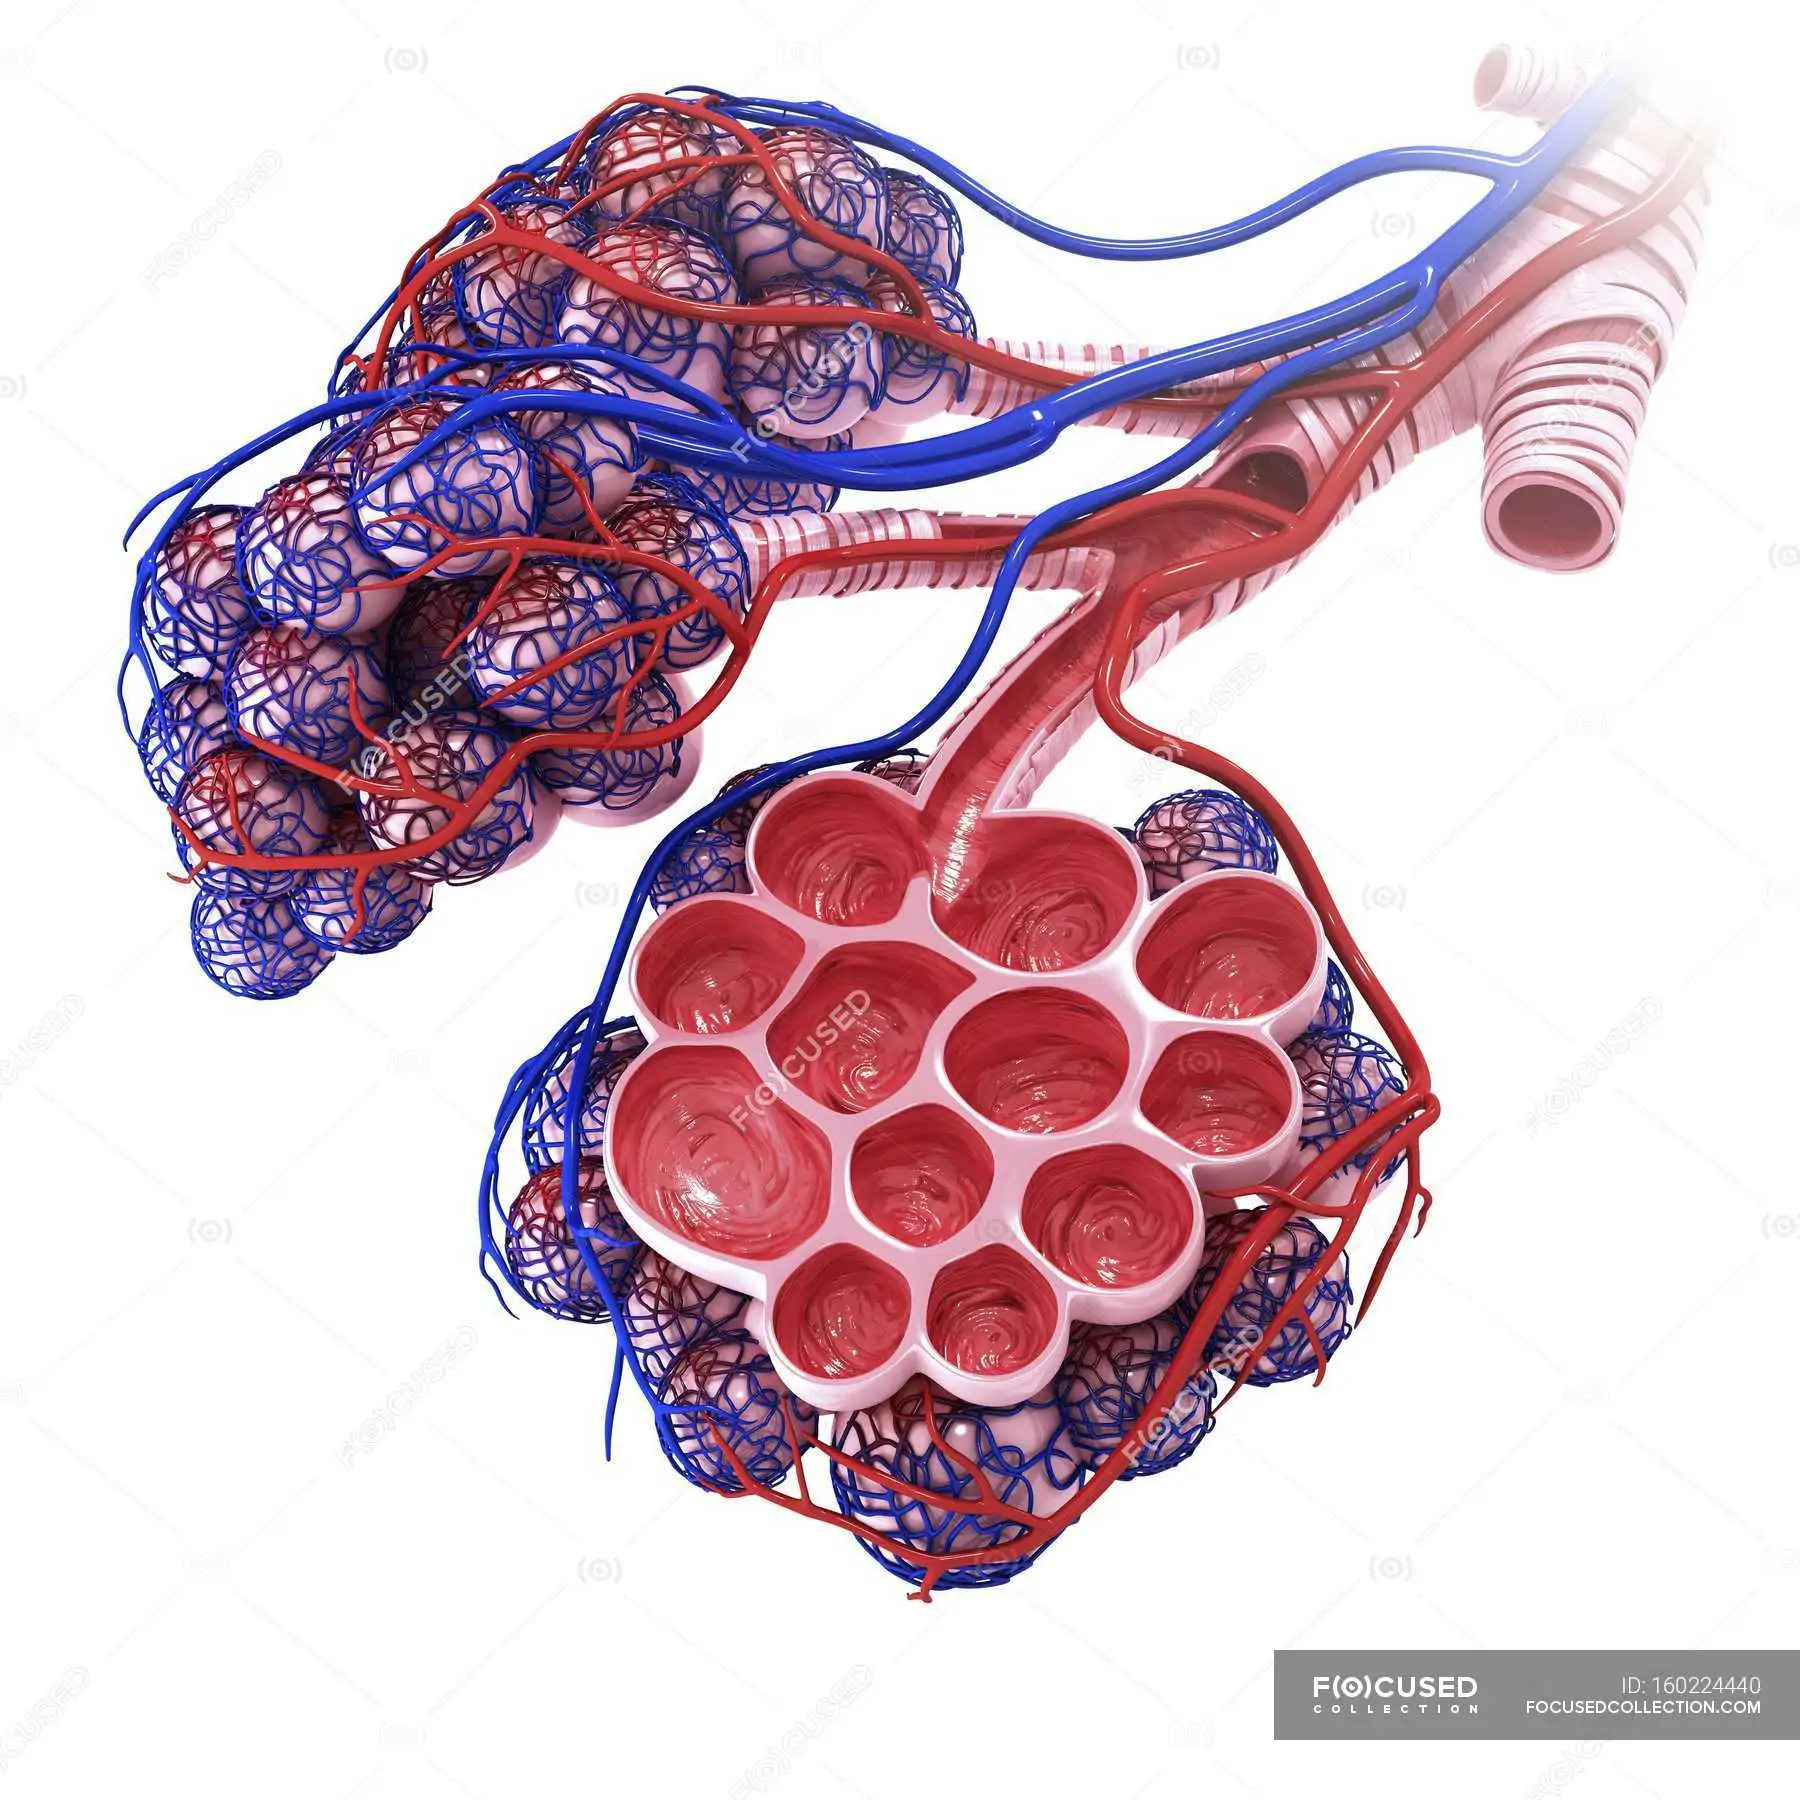 Human alveoli anatomy — respiratory, pulmonary venule - Stock Photo |  #160224440